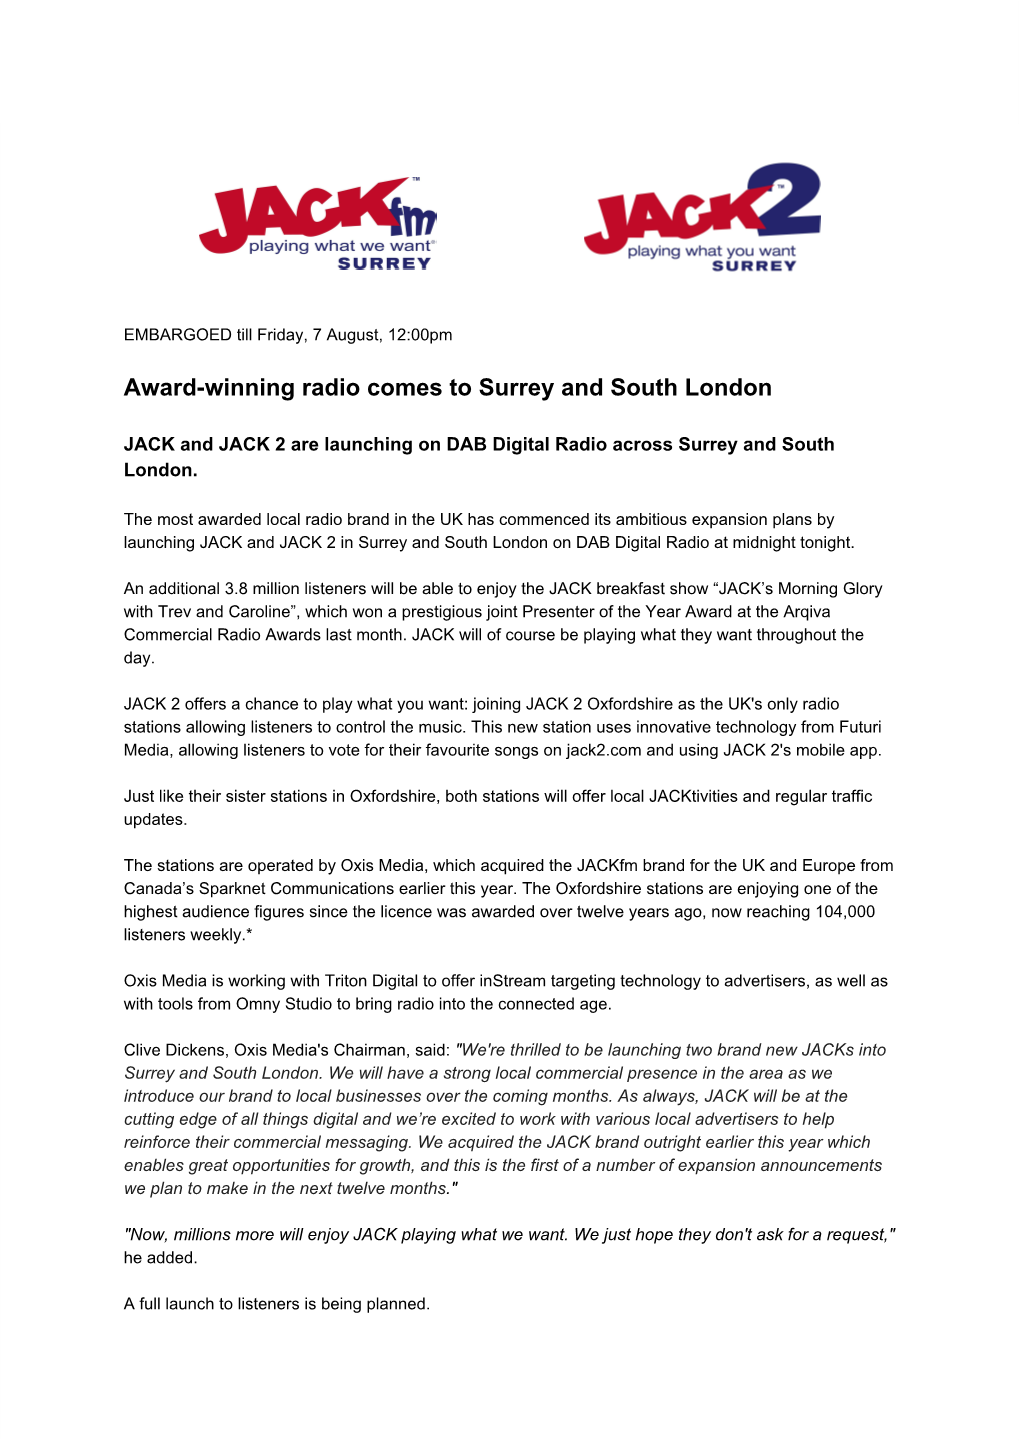 Awardwinning Radio Comes to Surrey and South London